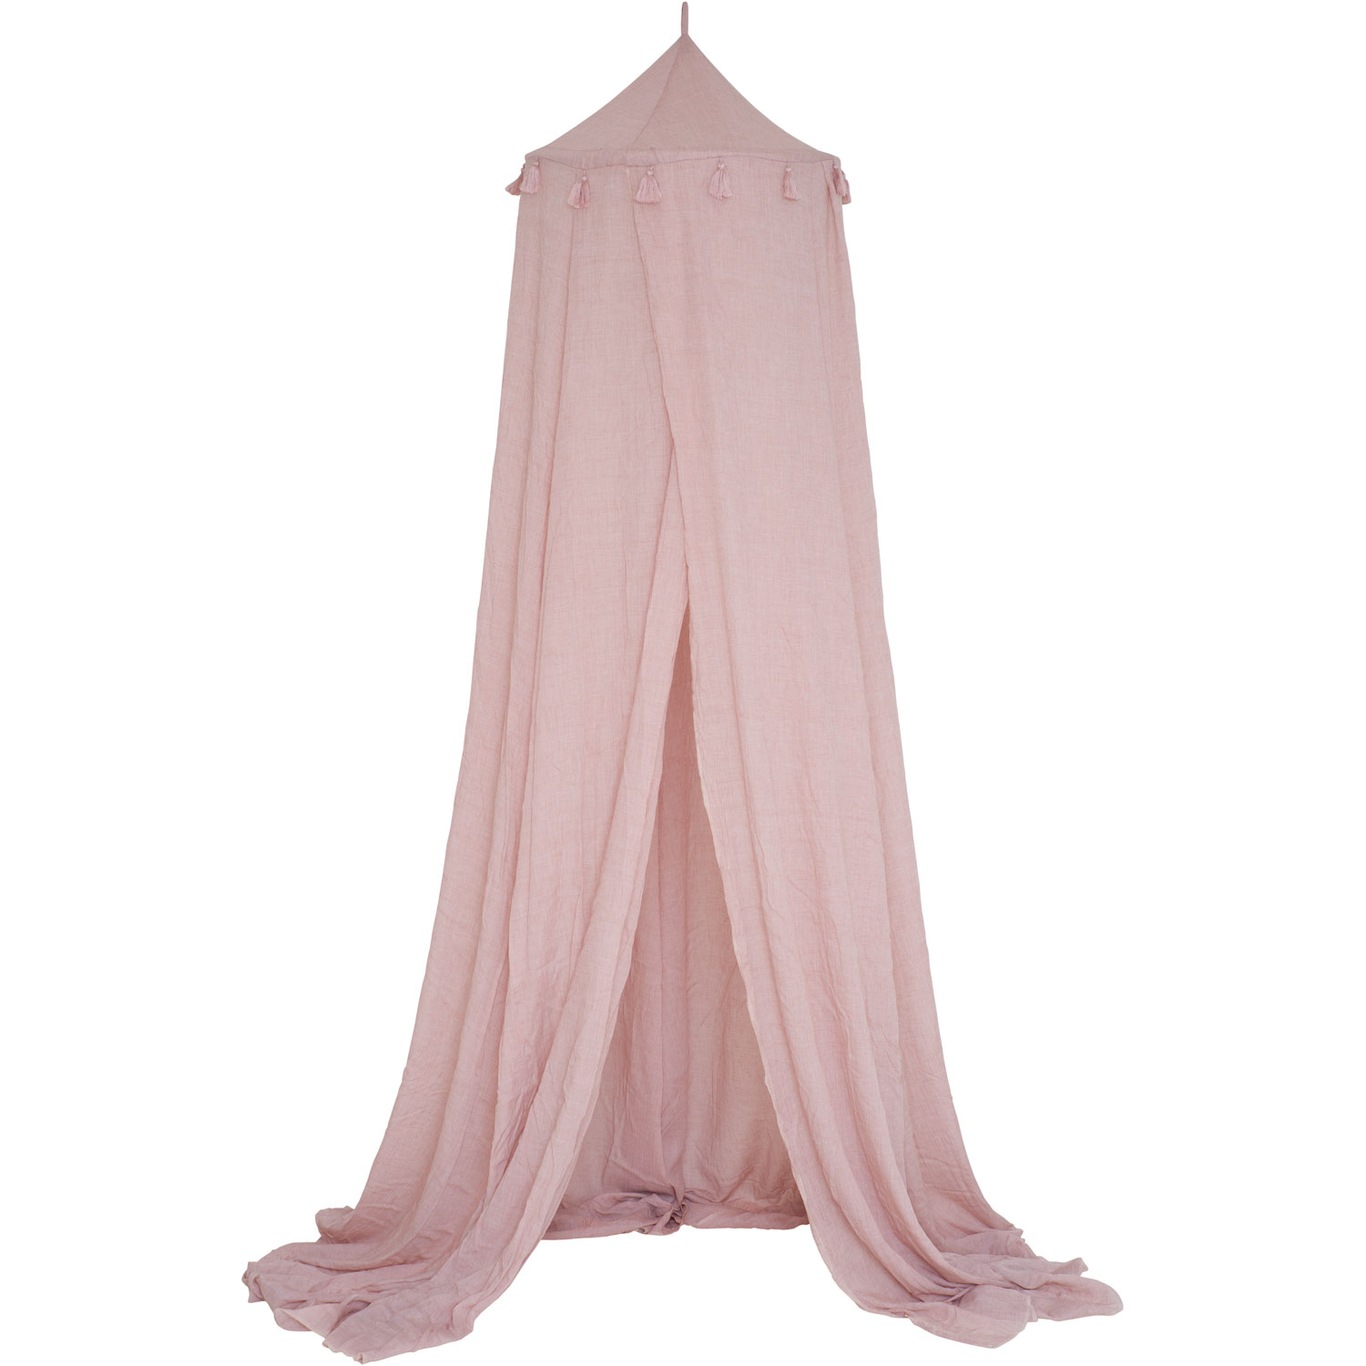 Canopy Betthimmel, Misty Grey Pink